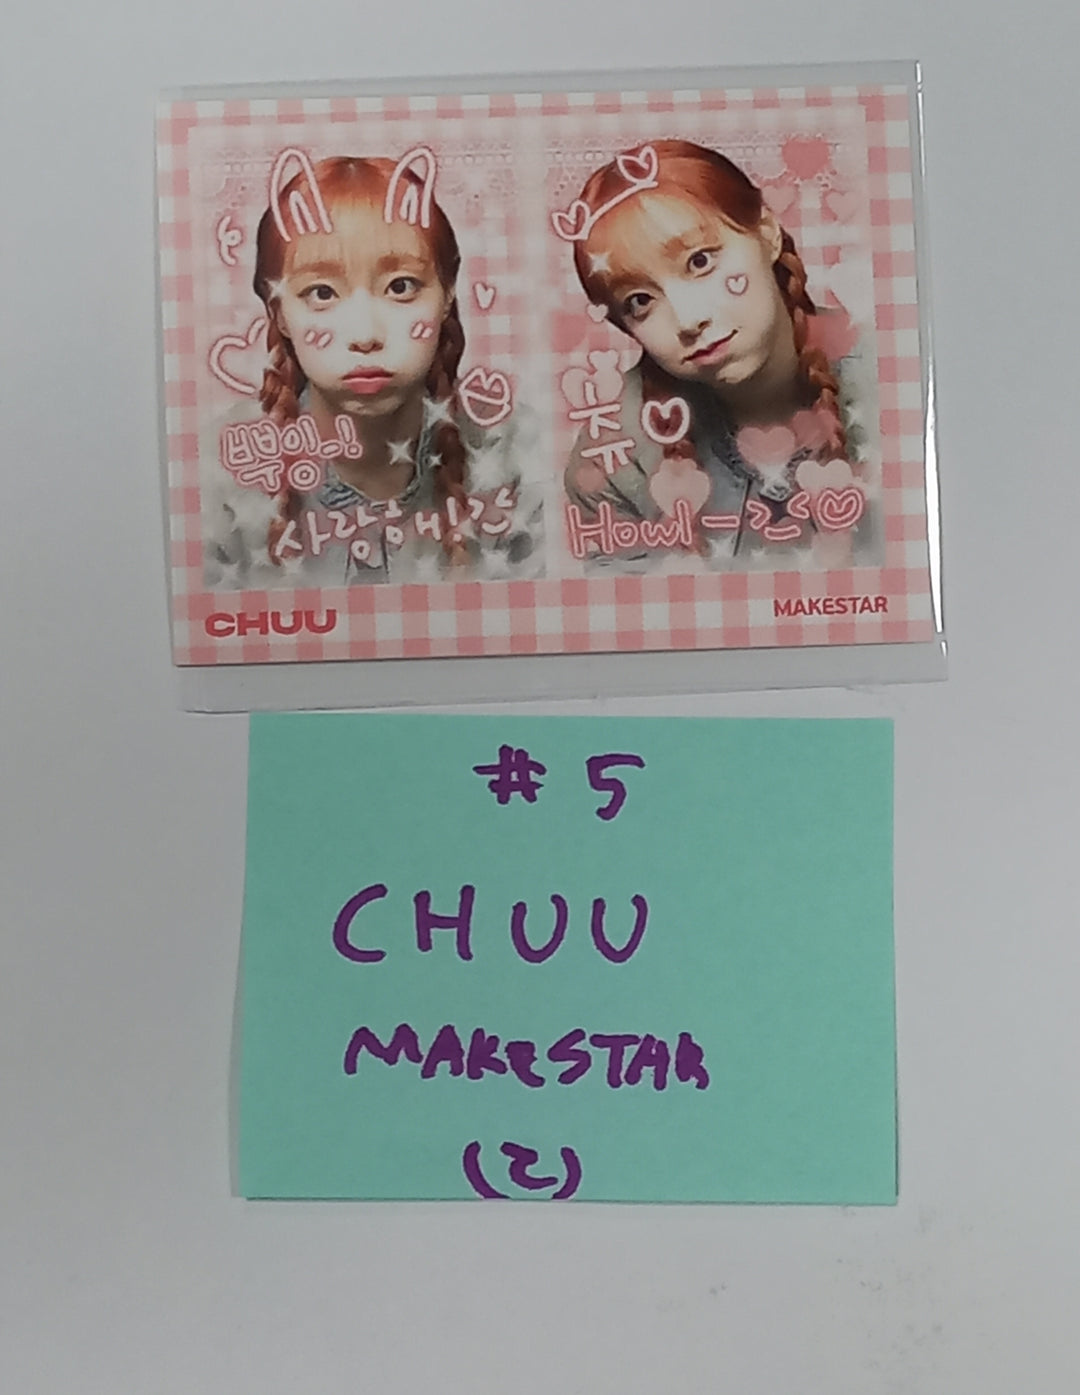 CHUU "Howl" - Makestar Fansign Event Photocard, 2 Cut Photo Round 4 [23.11.16]